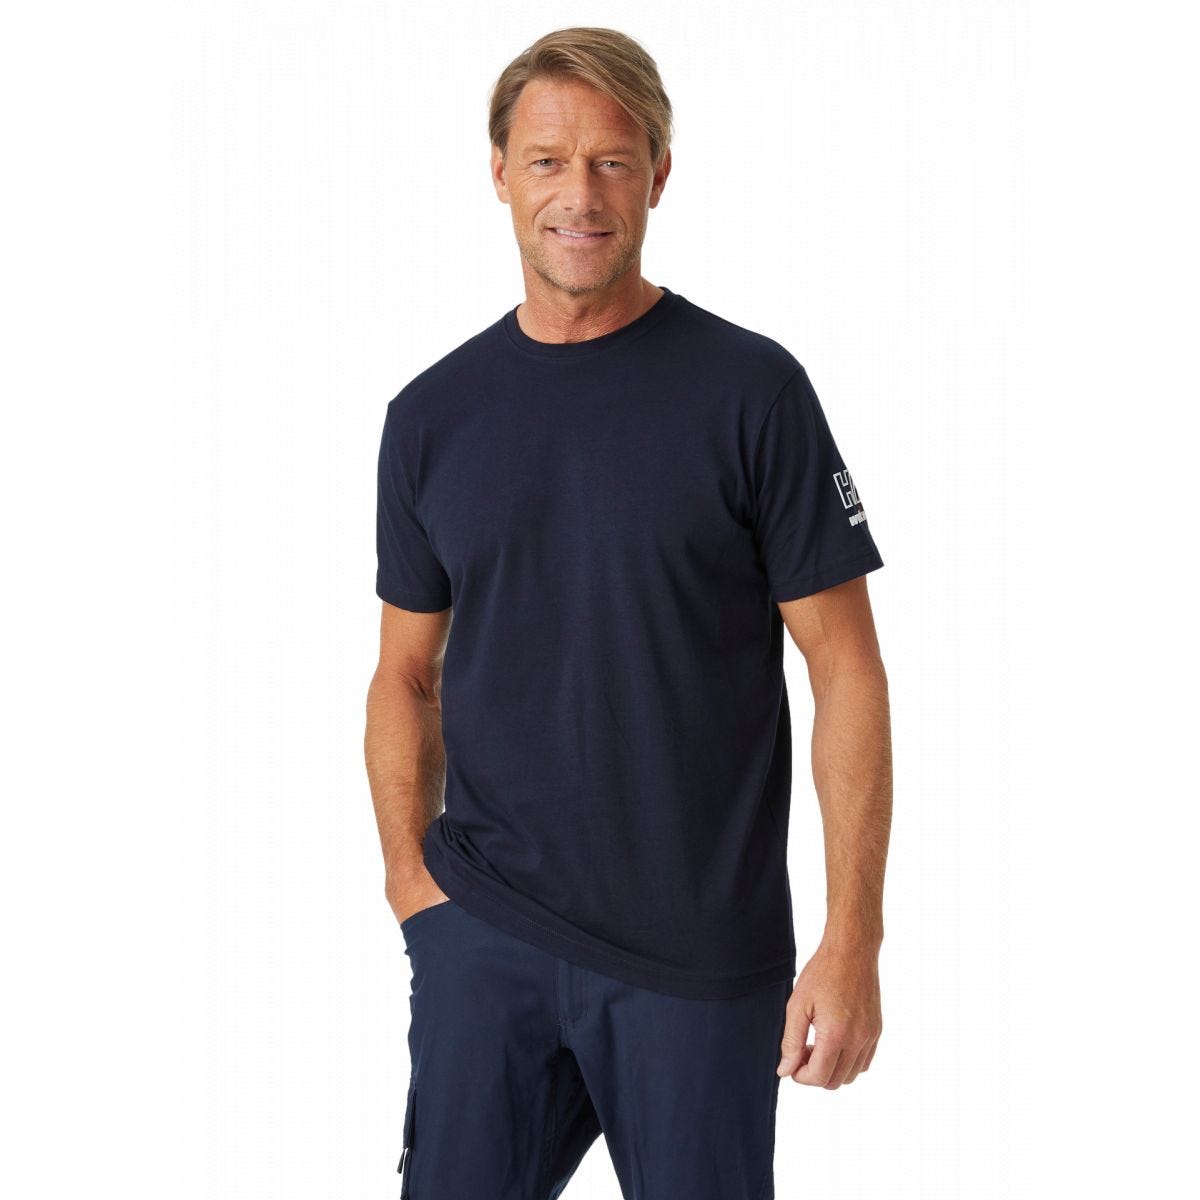 Tee-shirt Kensington Marine - Helly Hansen - Taille L 2